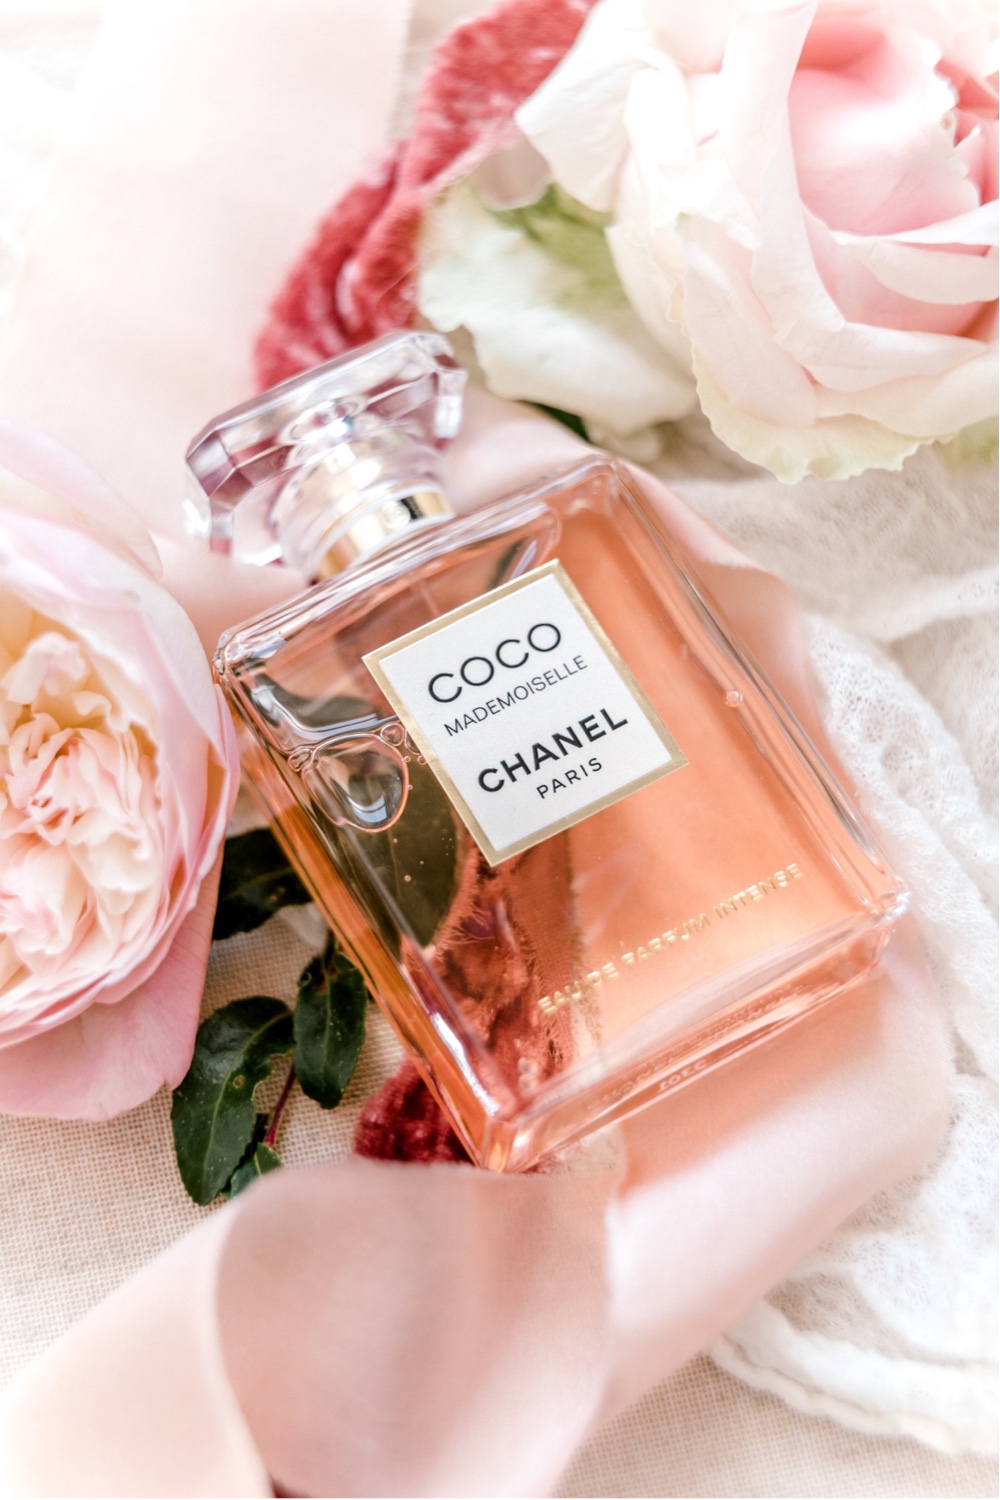 124 Coco Chanel Perfume Wedding Details Photos